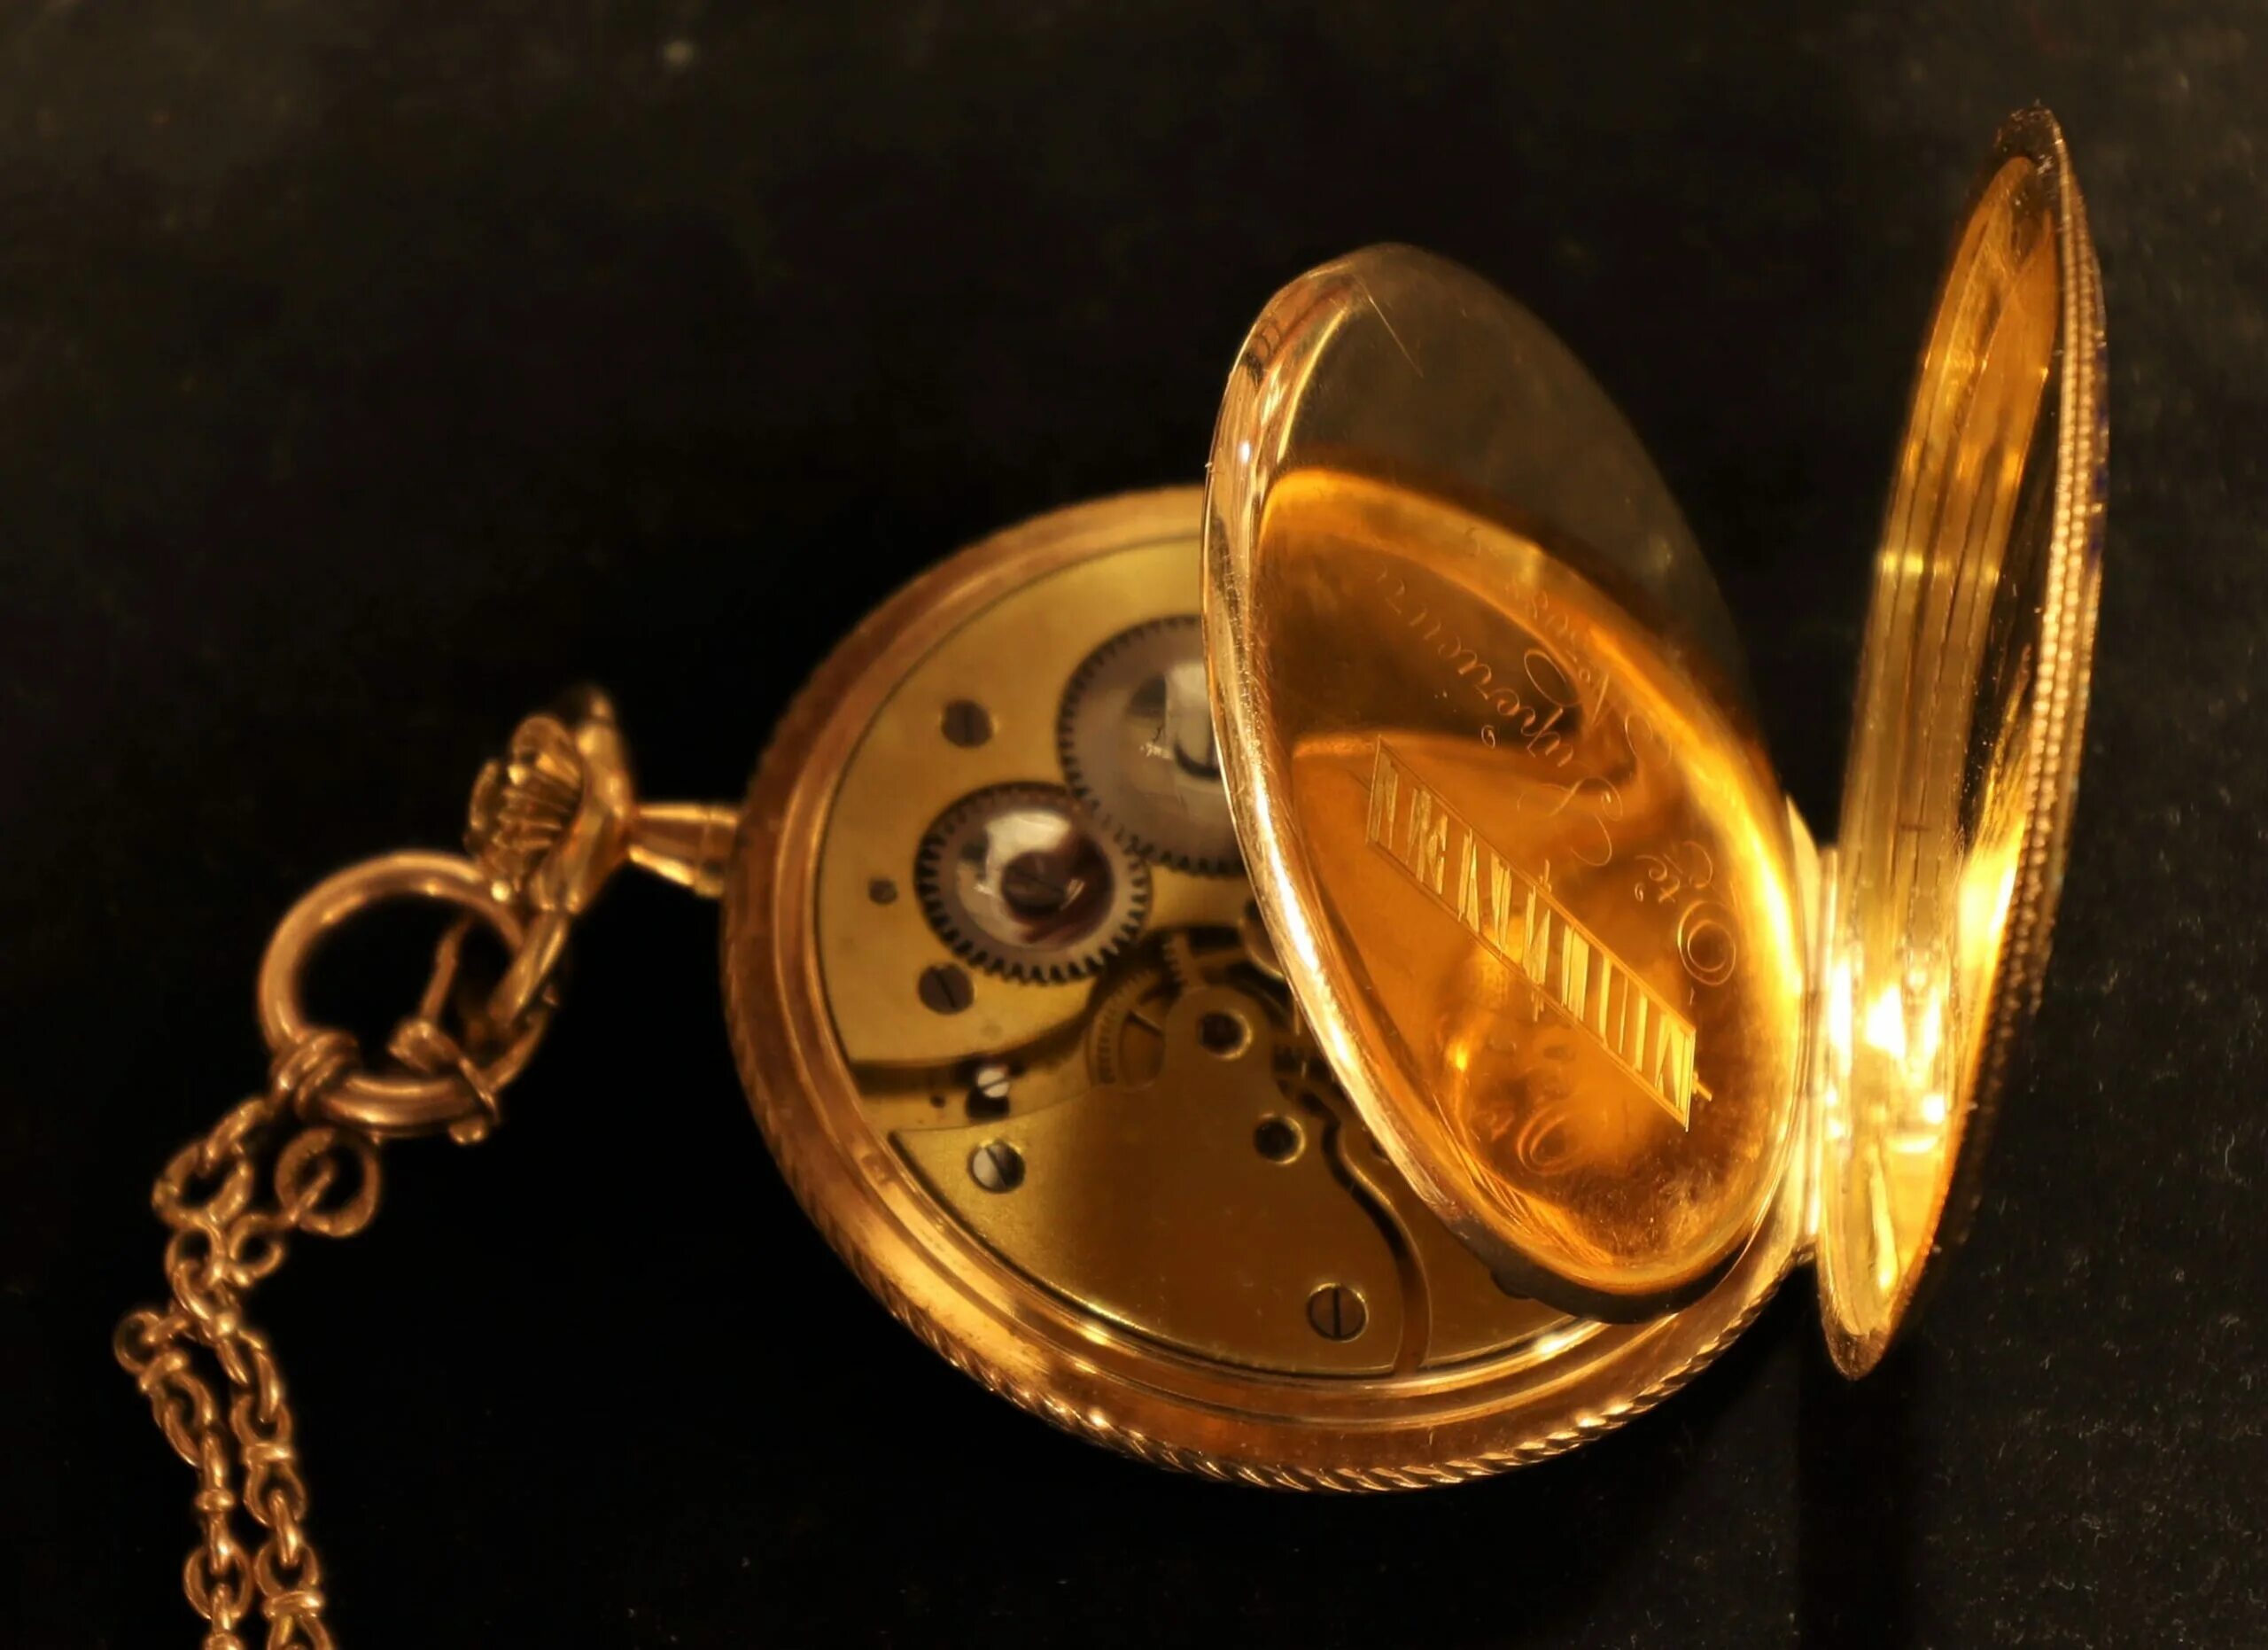 Швейцарские карманные часы. Moulinet часы карманные золотые. Часы золотые 19 века Швейцария карманные. Карманные часы Elite Argentan. Часы карманные Швейцария 19 век.